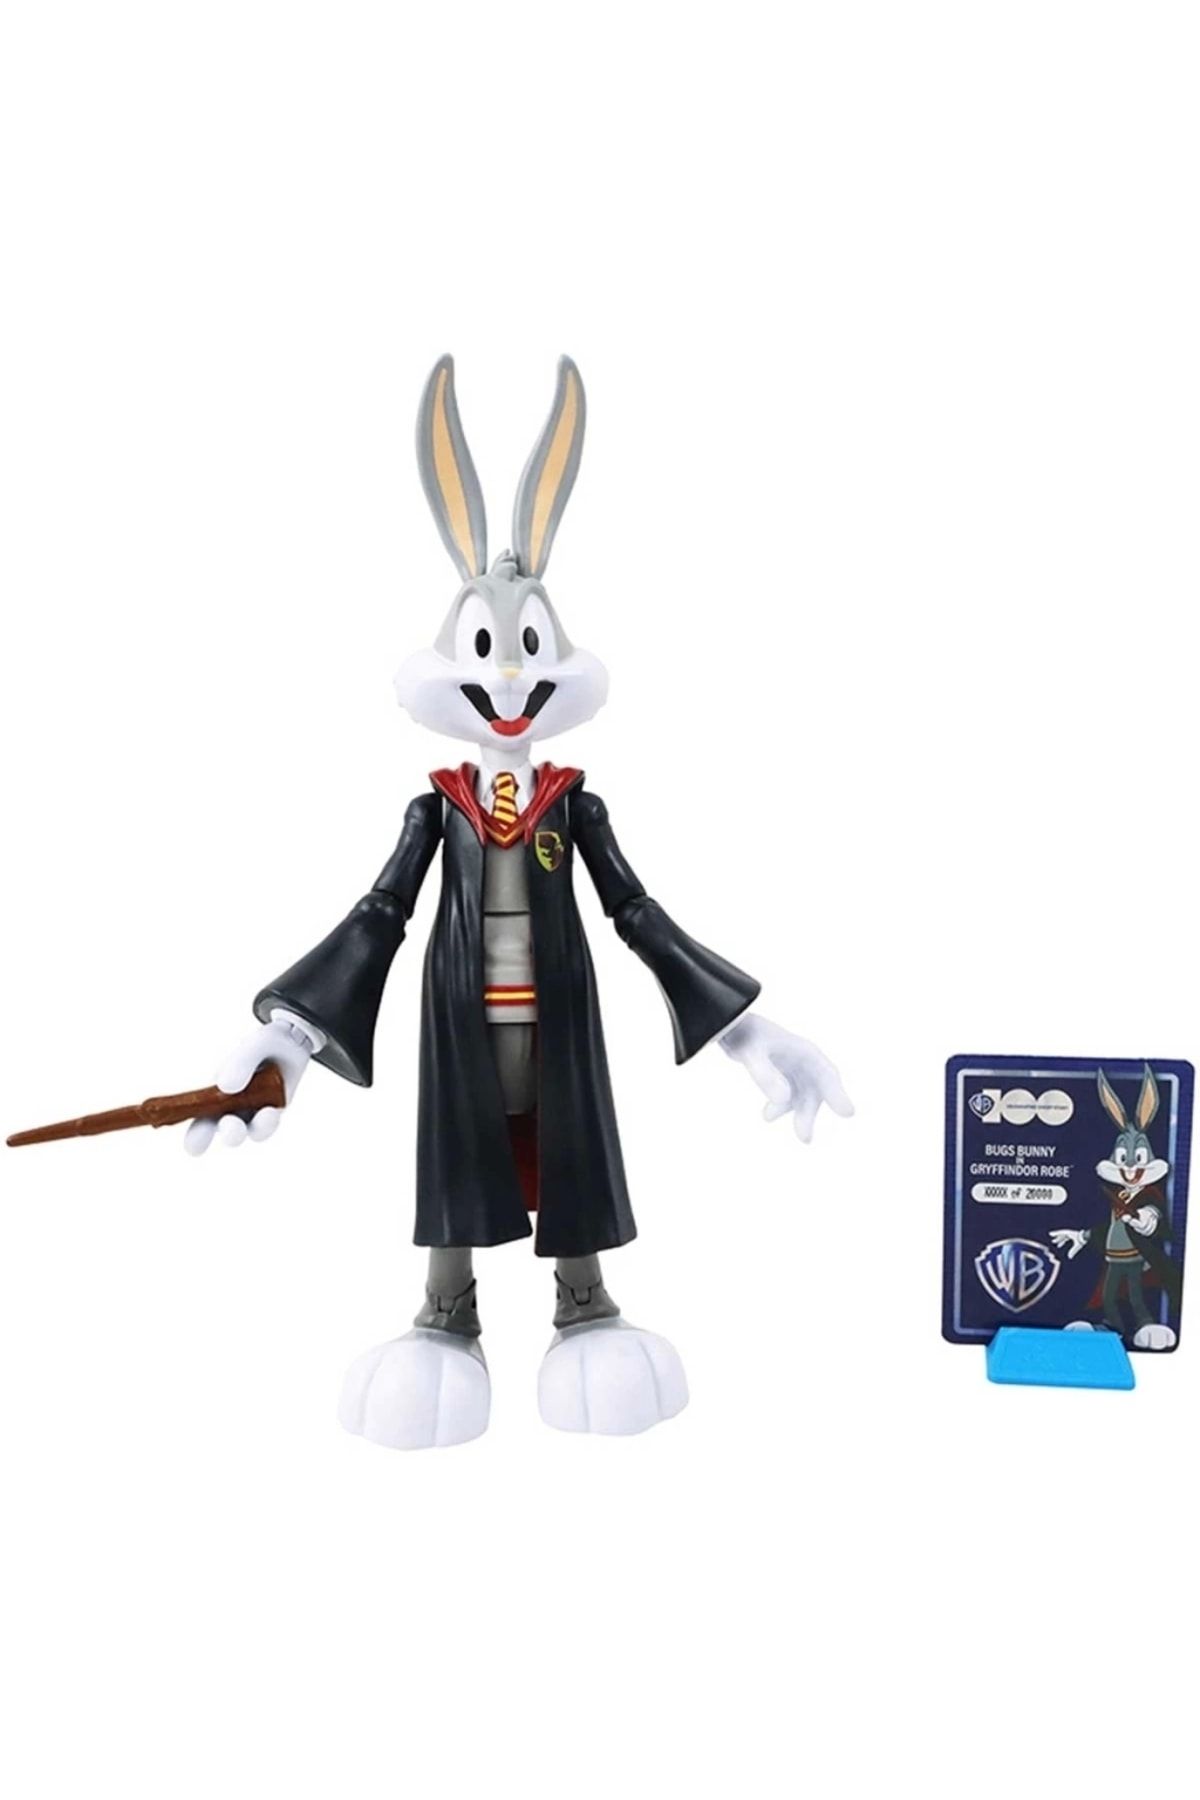 Warner Bros Wb Bugs Bunny In Gryffindor Robe Action Figure Wb100 Lt&hp-22881